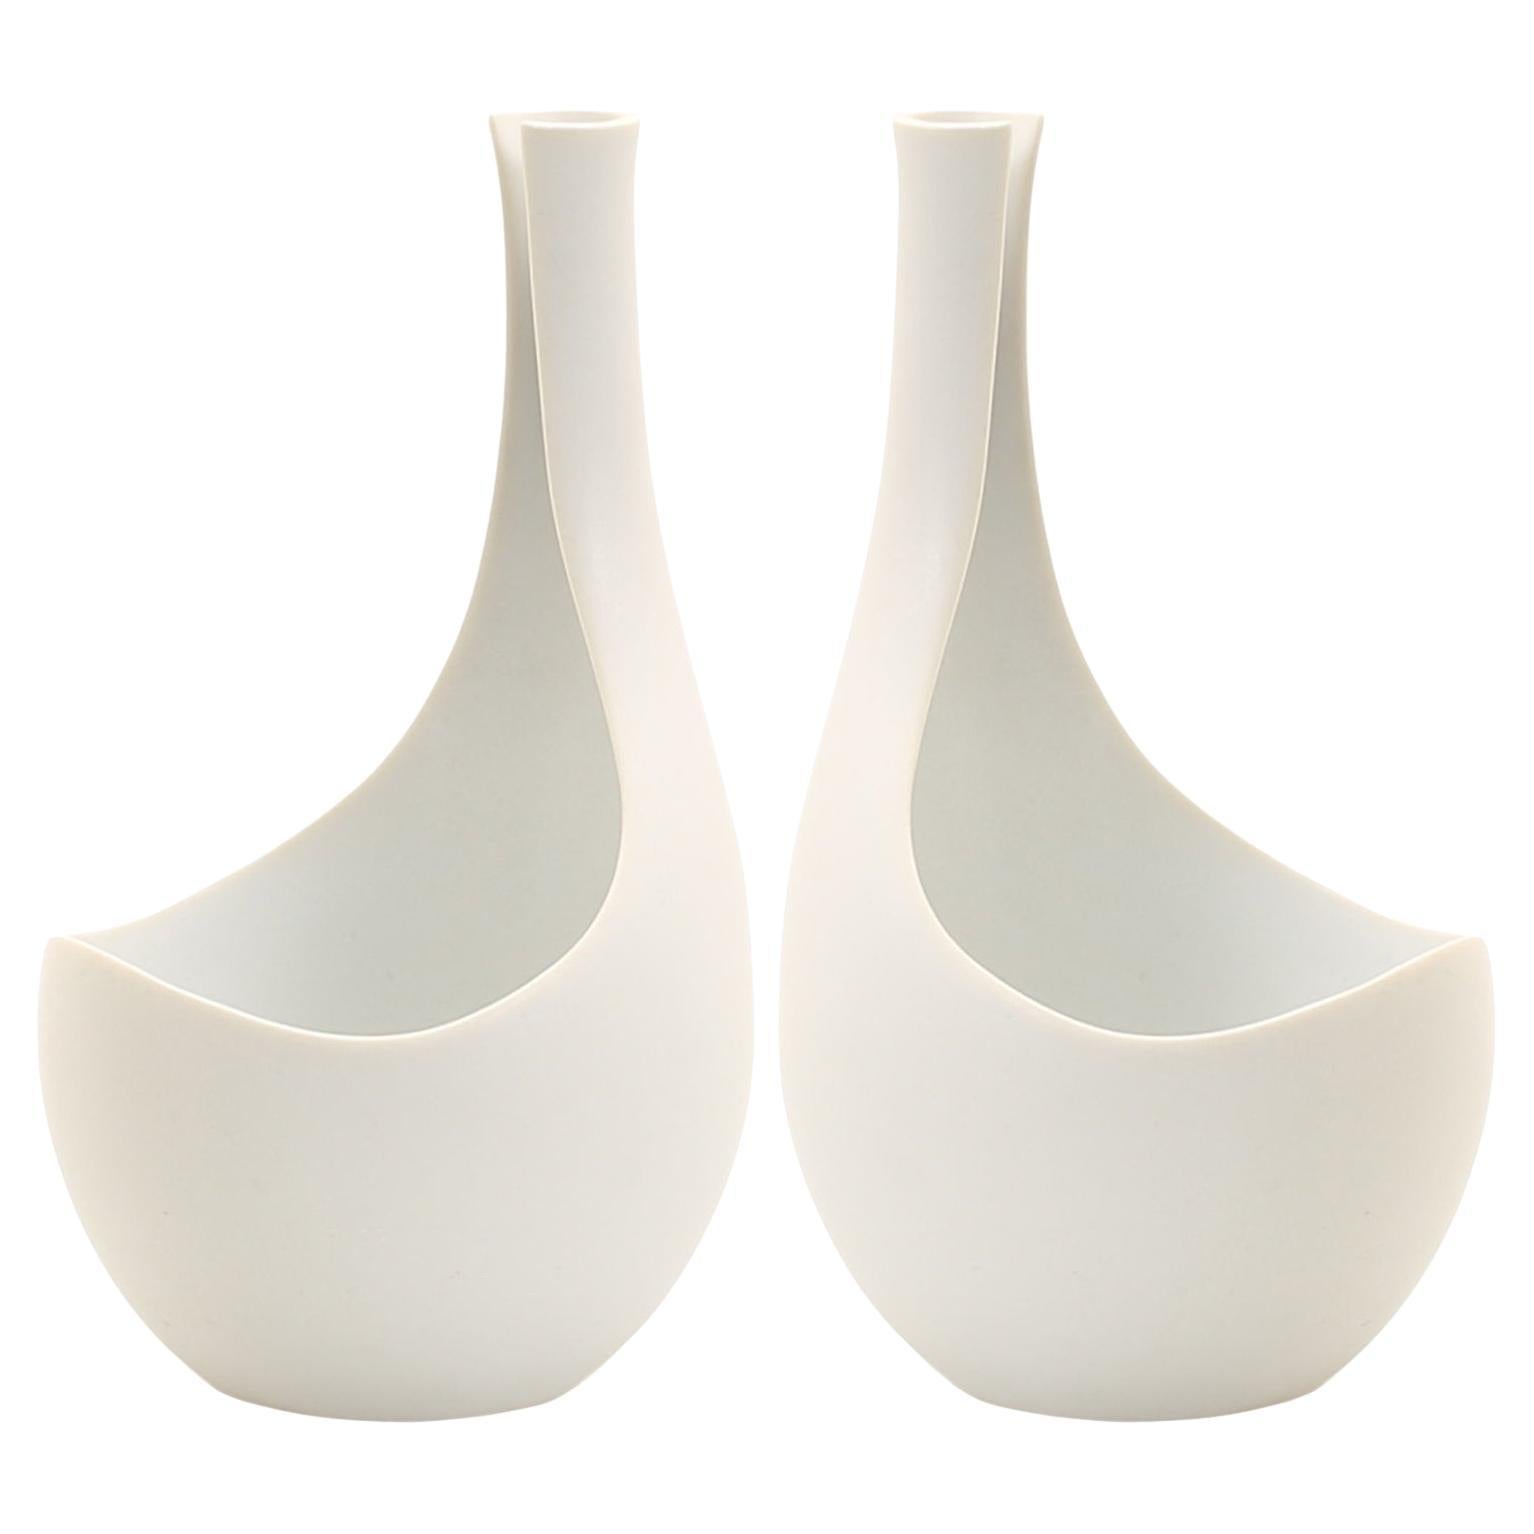 2 Mid-Century Modern White Vases "Pungo" by Stig Lindberg, made in Gustavsberg For Sale